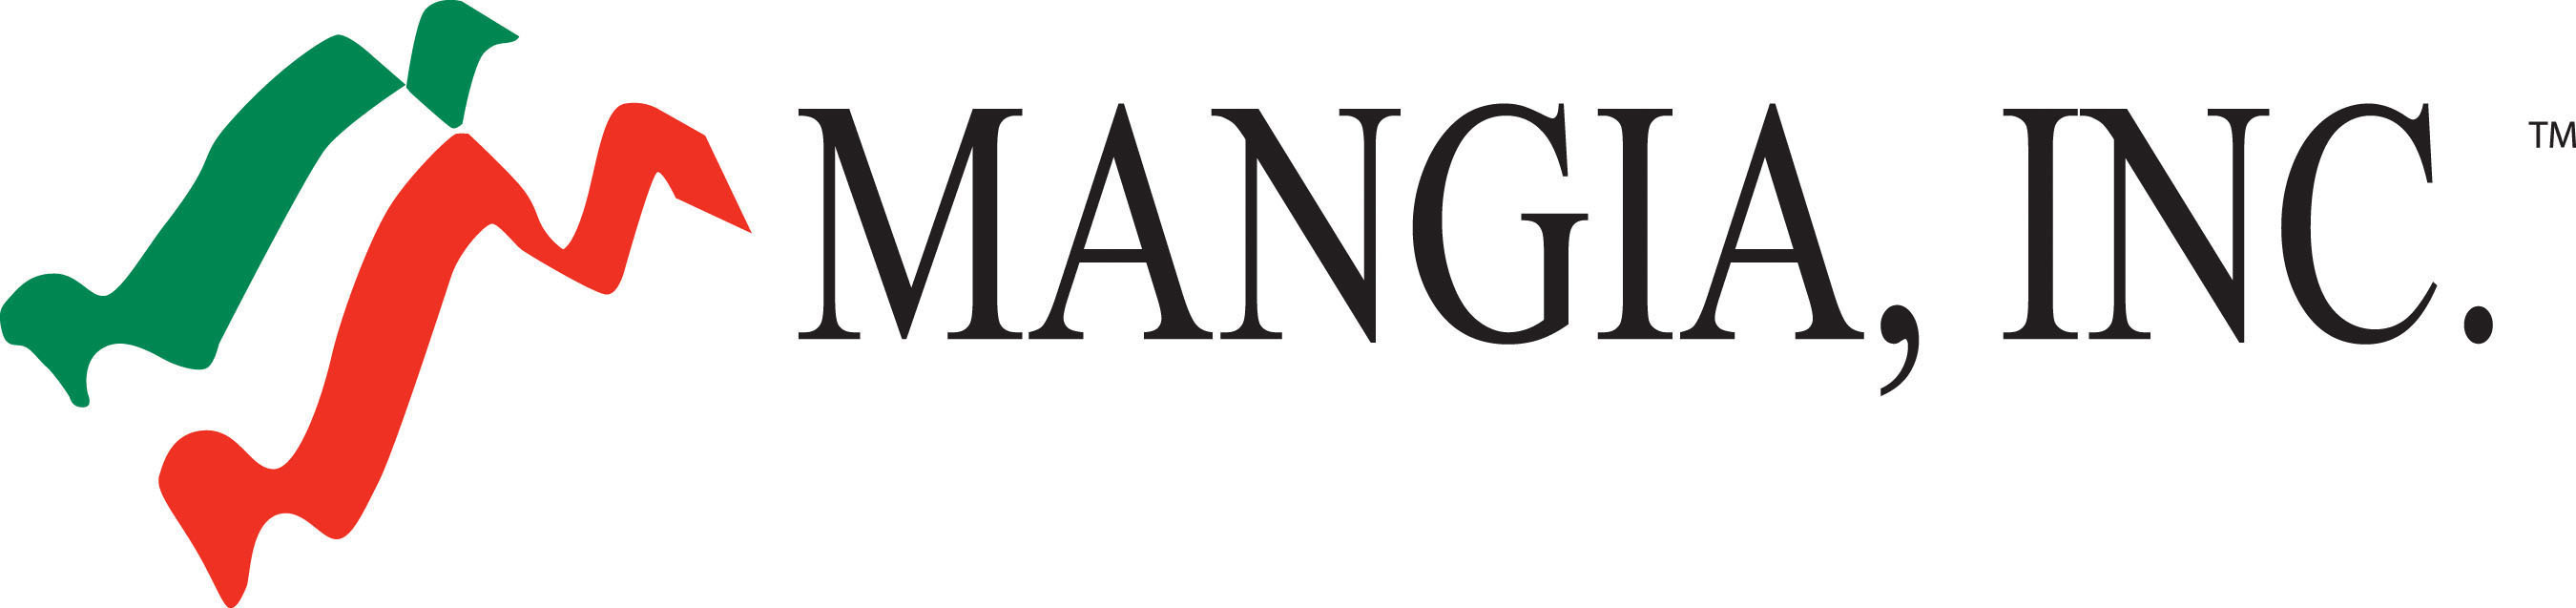 Mangia, Inc. logo. (PRNewsFoto/Mangia, Inc.) (PRNewsFoto/MANGIA, INC.)